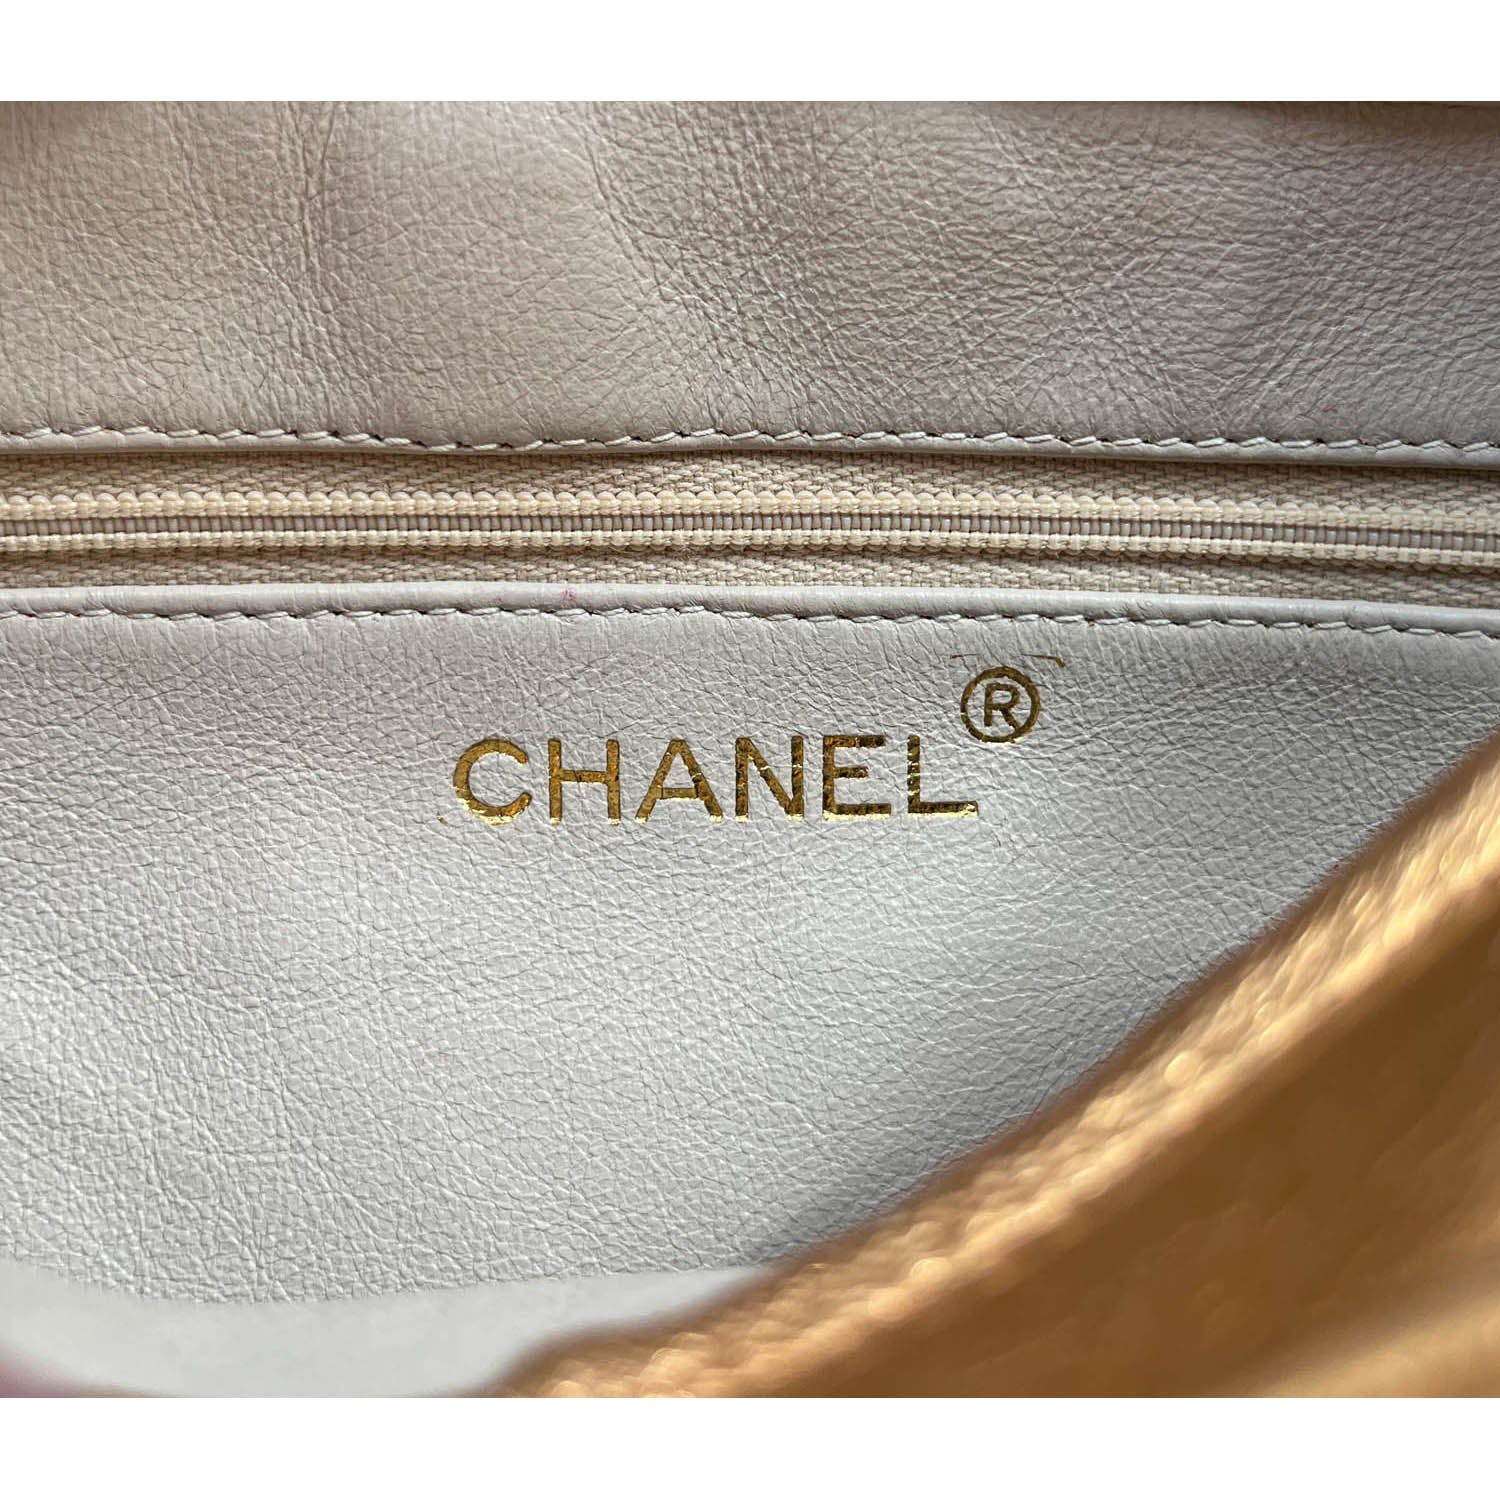 Name of this bag? : r/chanel